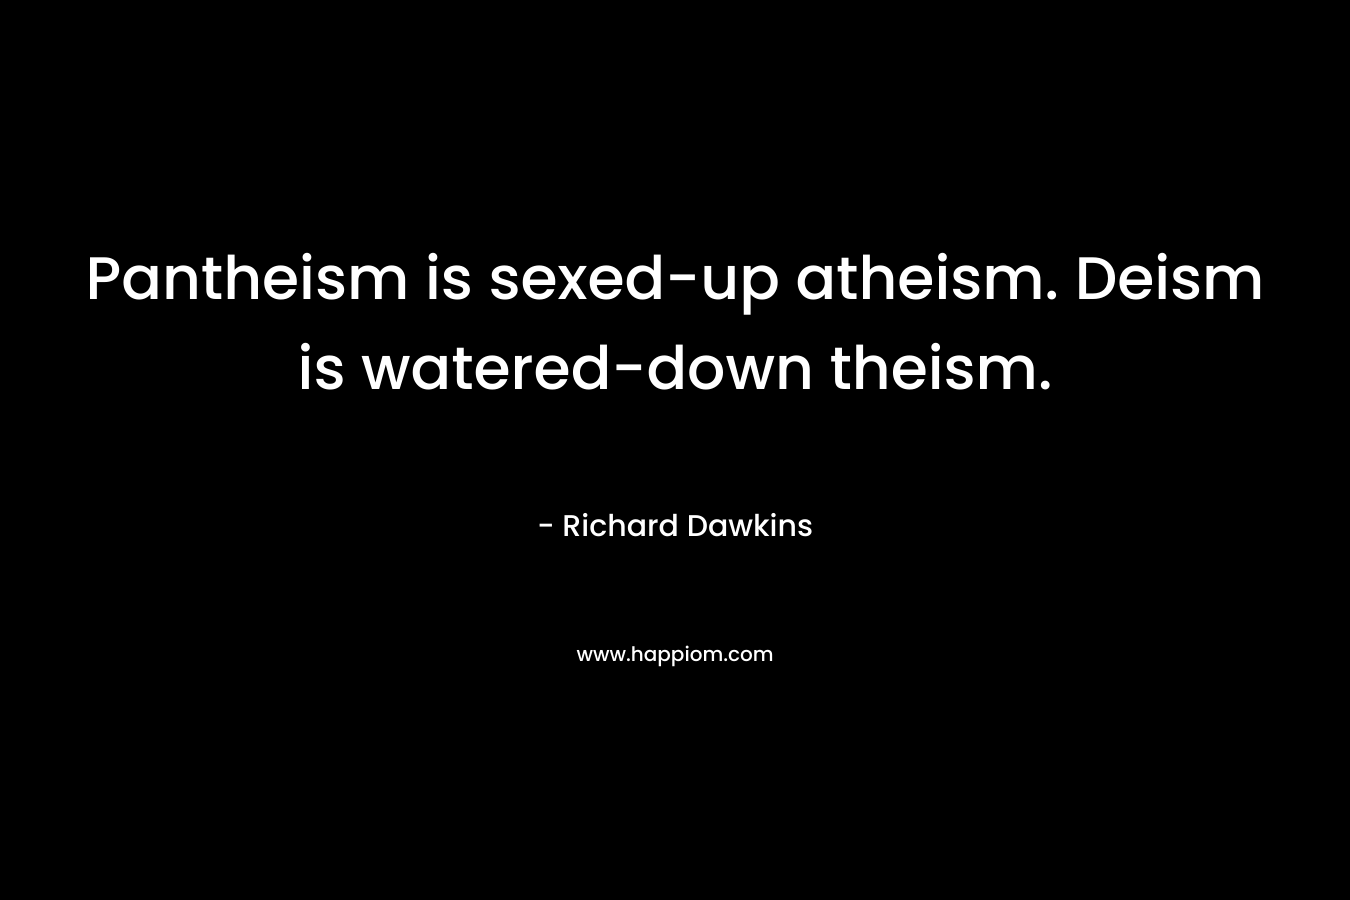 Pantheism is sexed-up atheism. Deism is watered-down theism. – Richard Dawkins